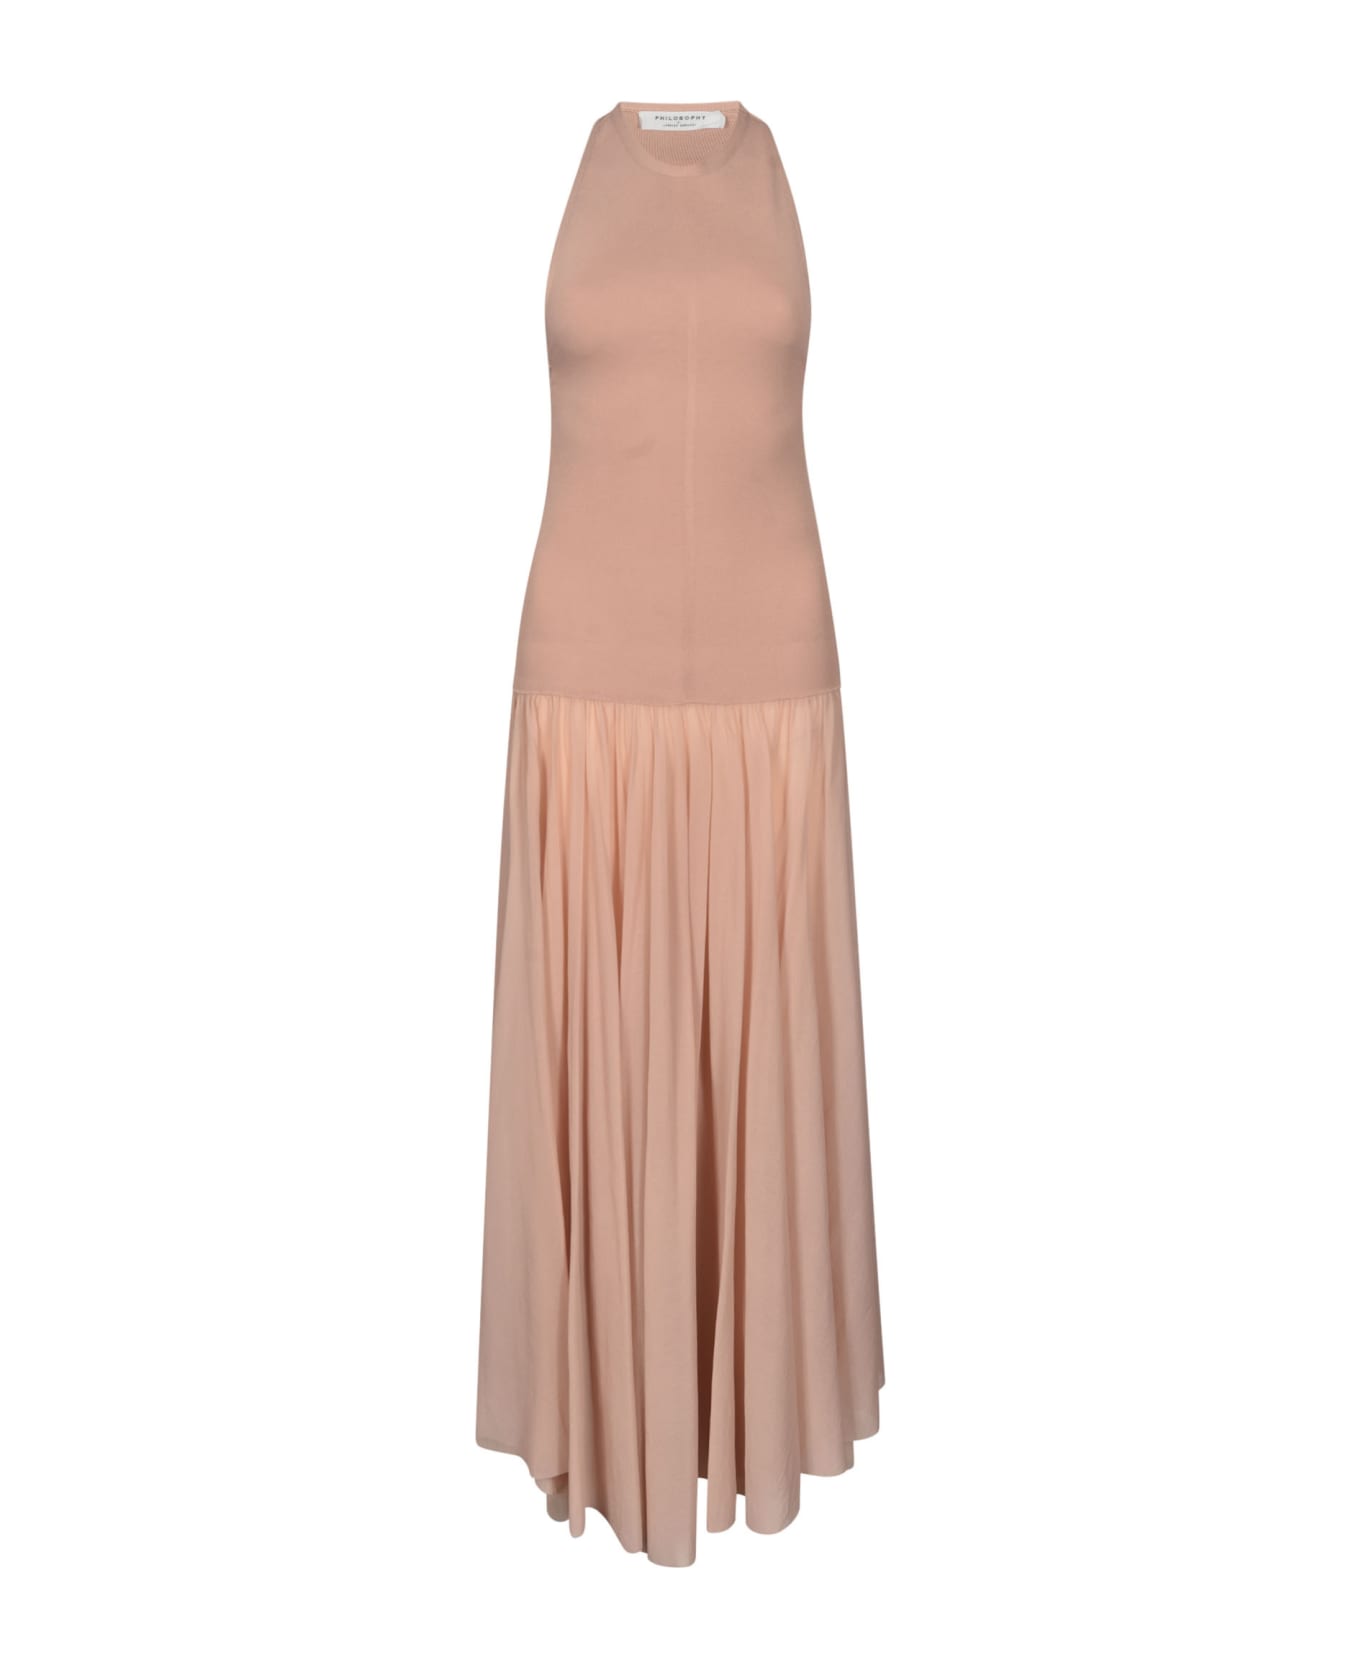 Philosophy di Lorenzo Serafini Pleated Skirt Sleeveless Dress - Sand